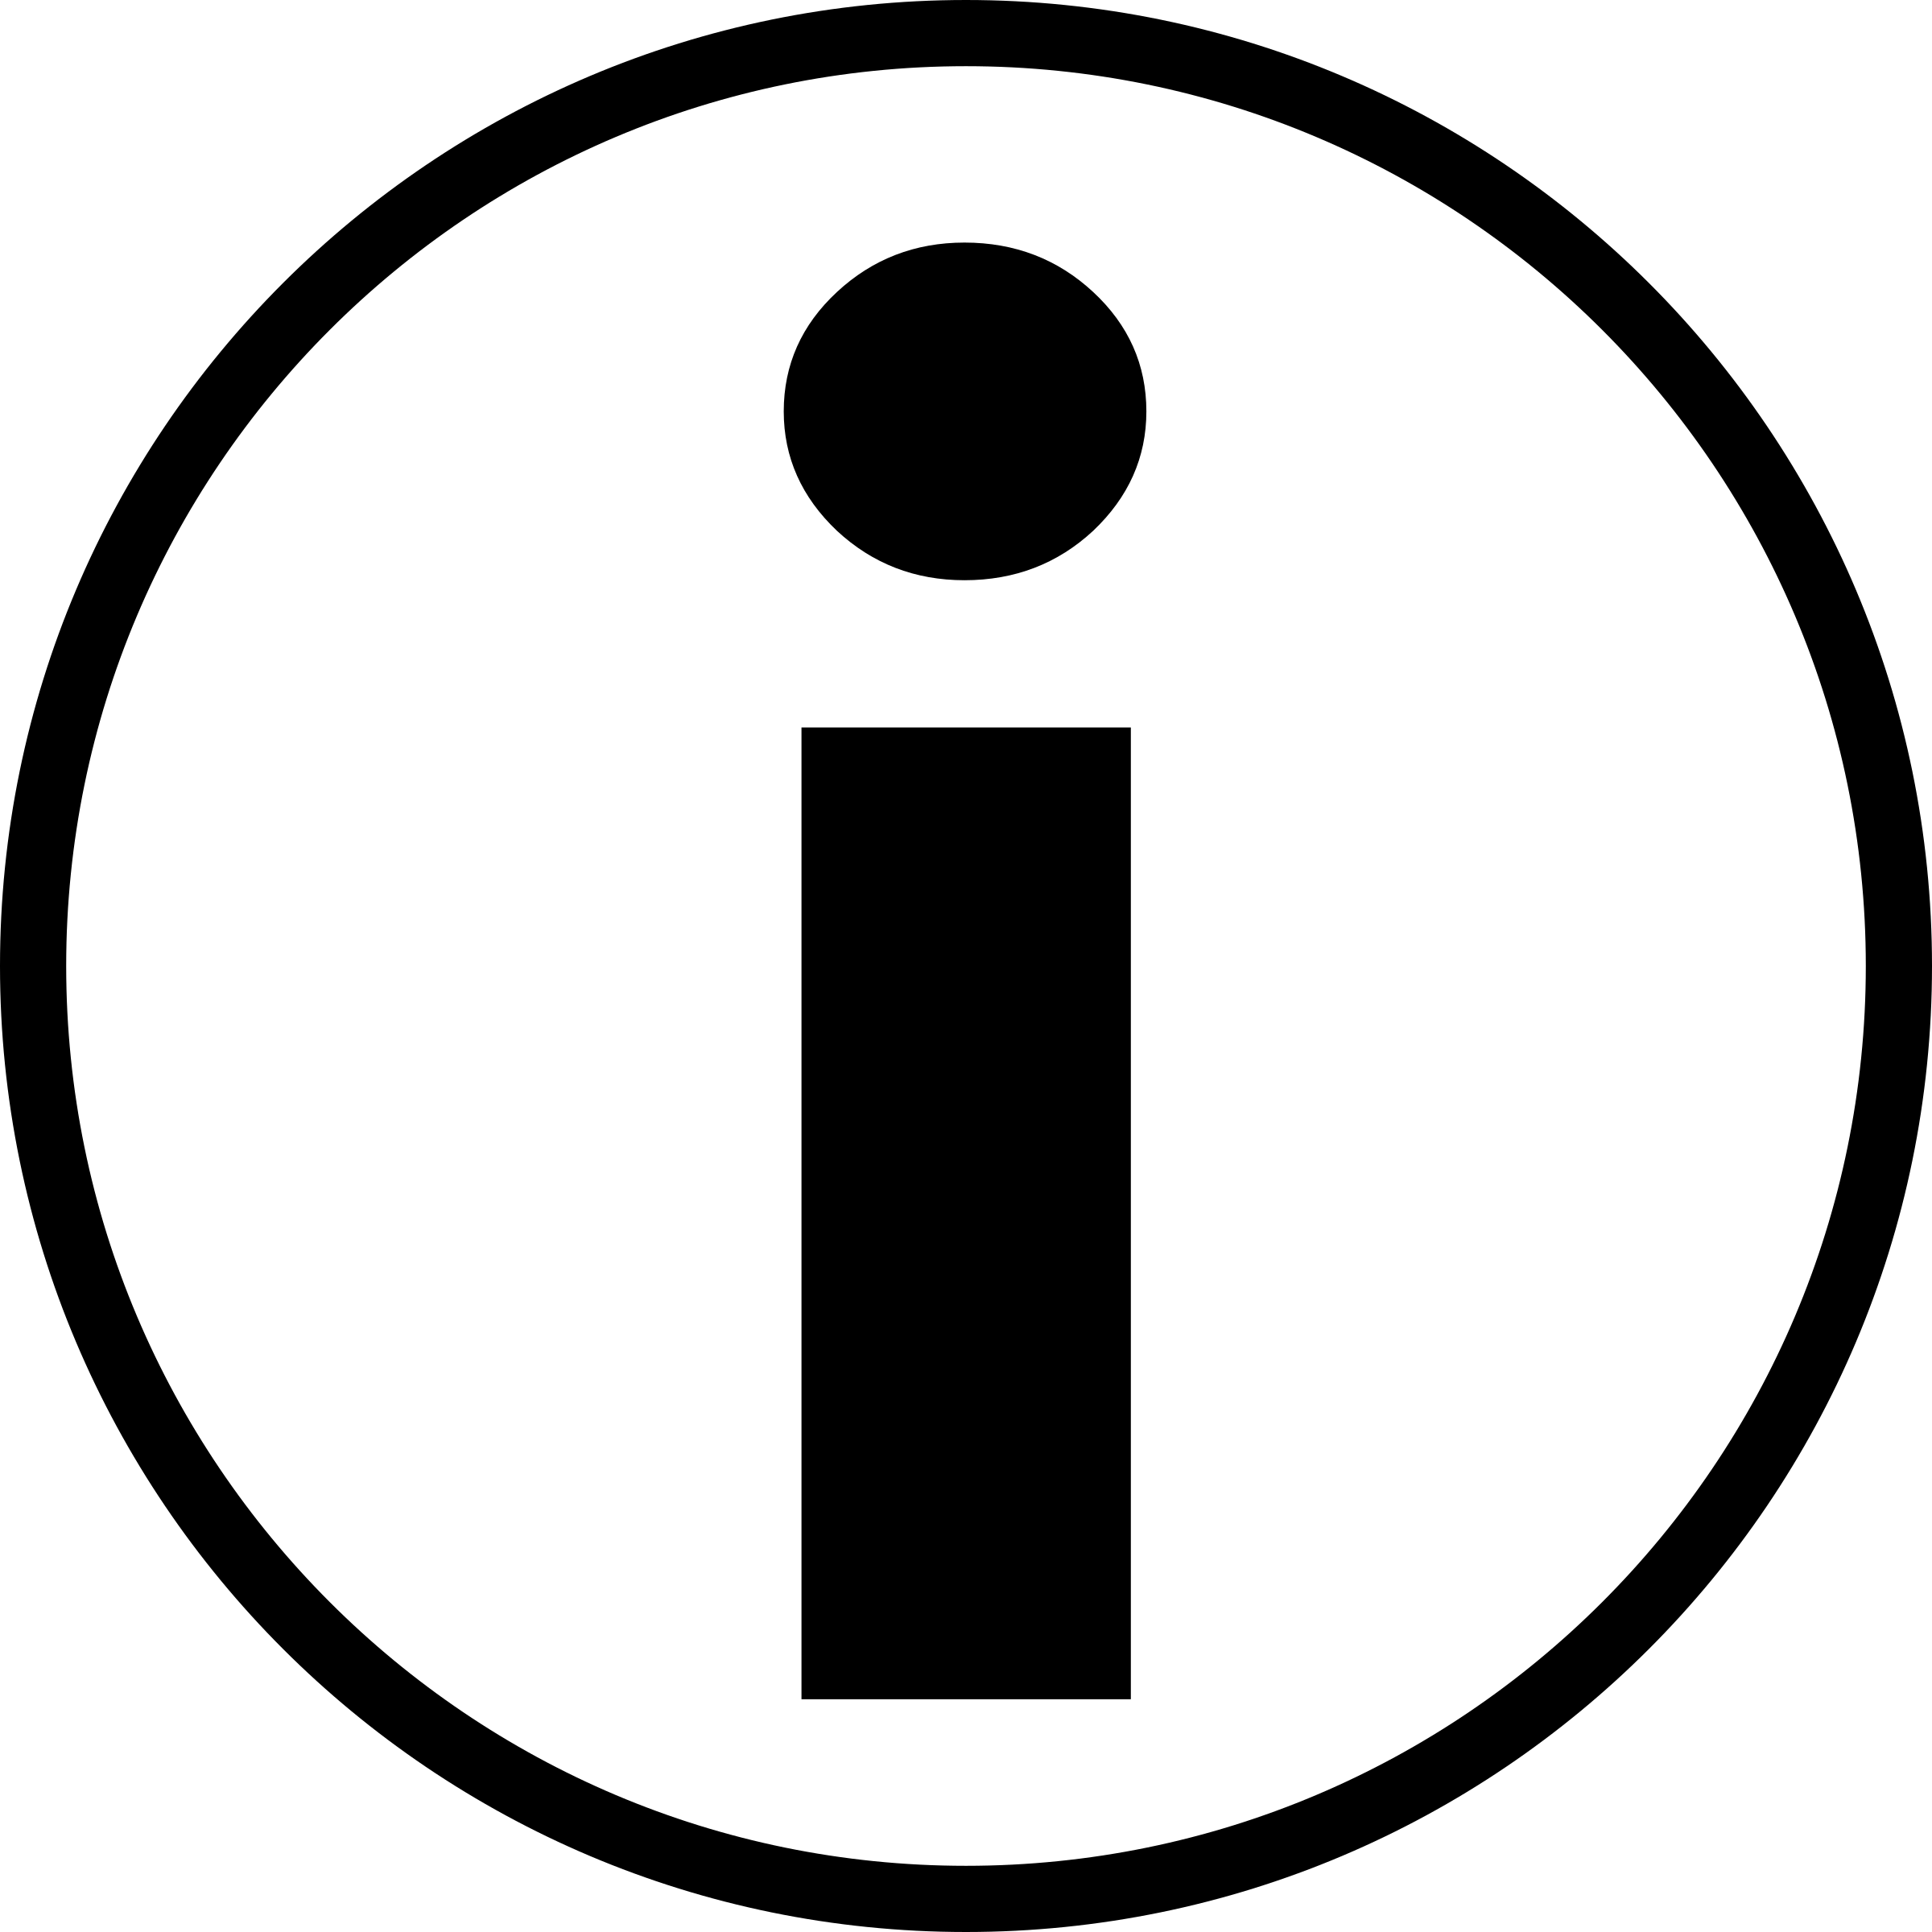 Clipart - Universal information symbol